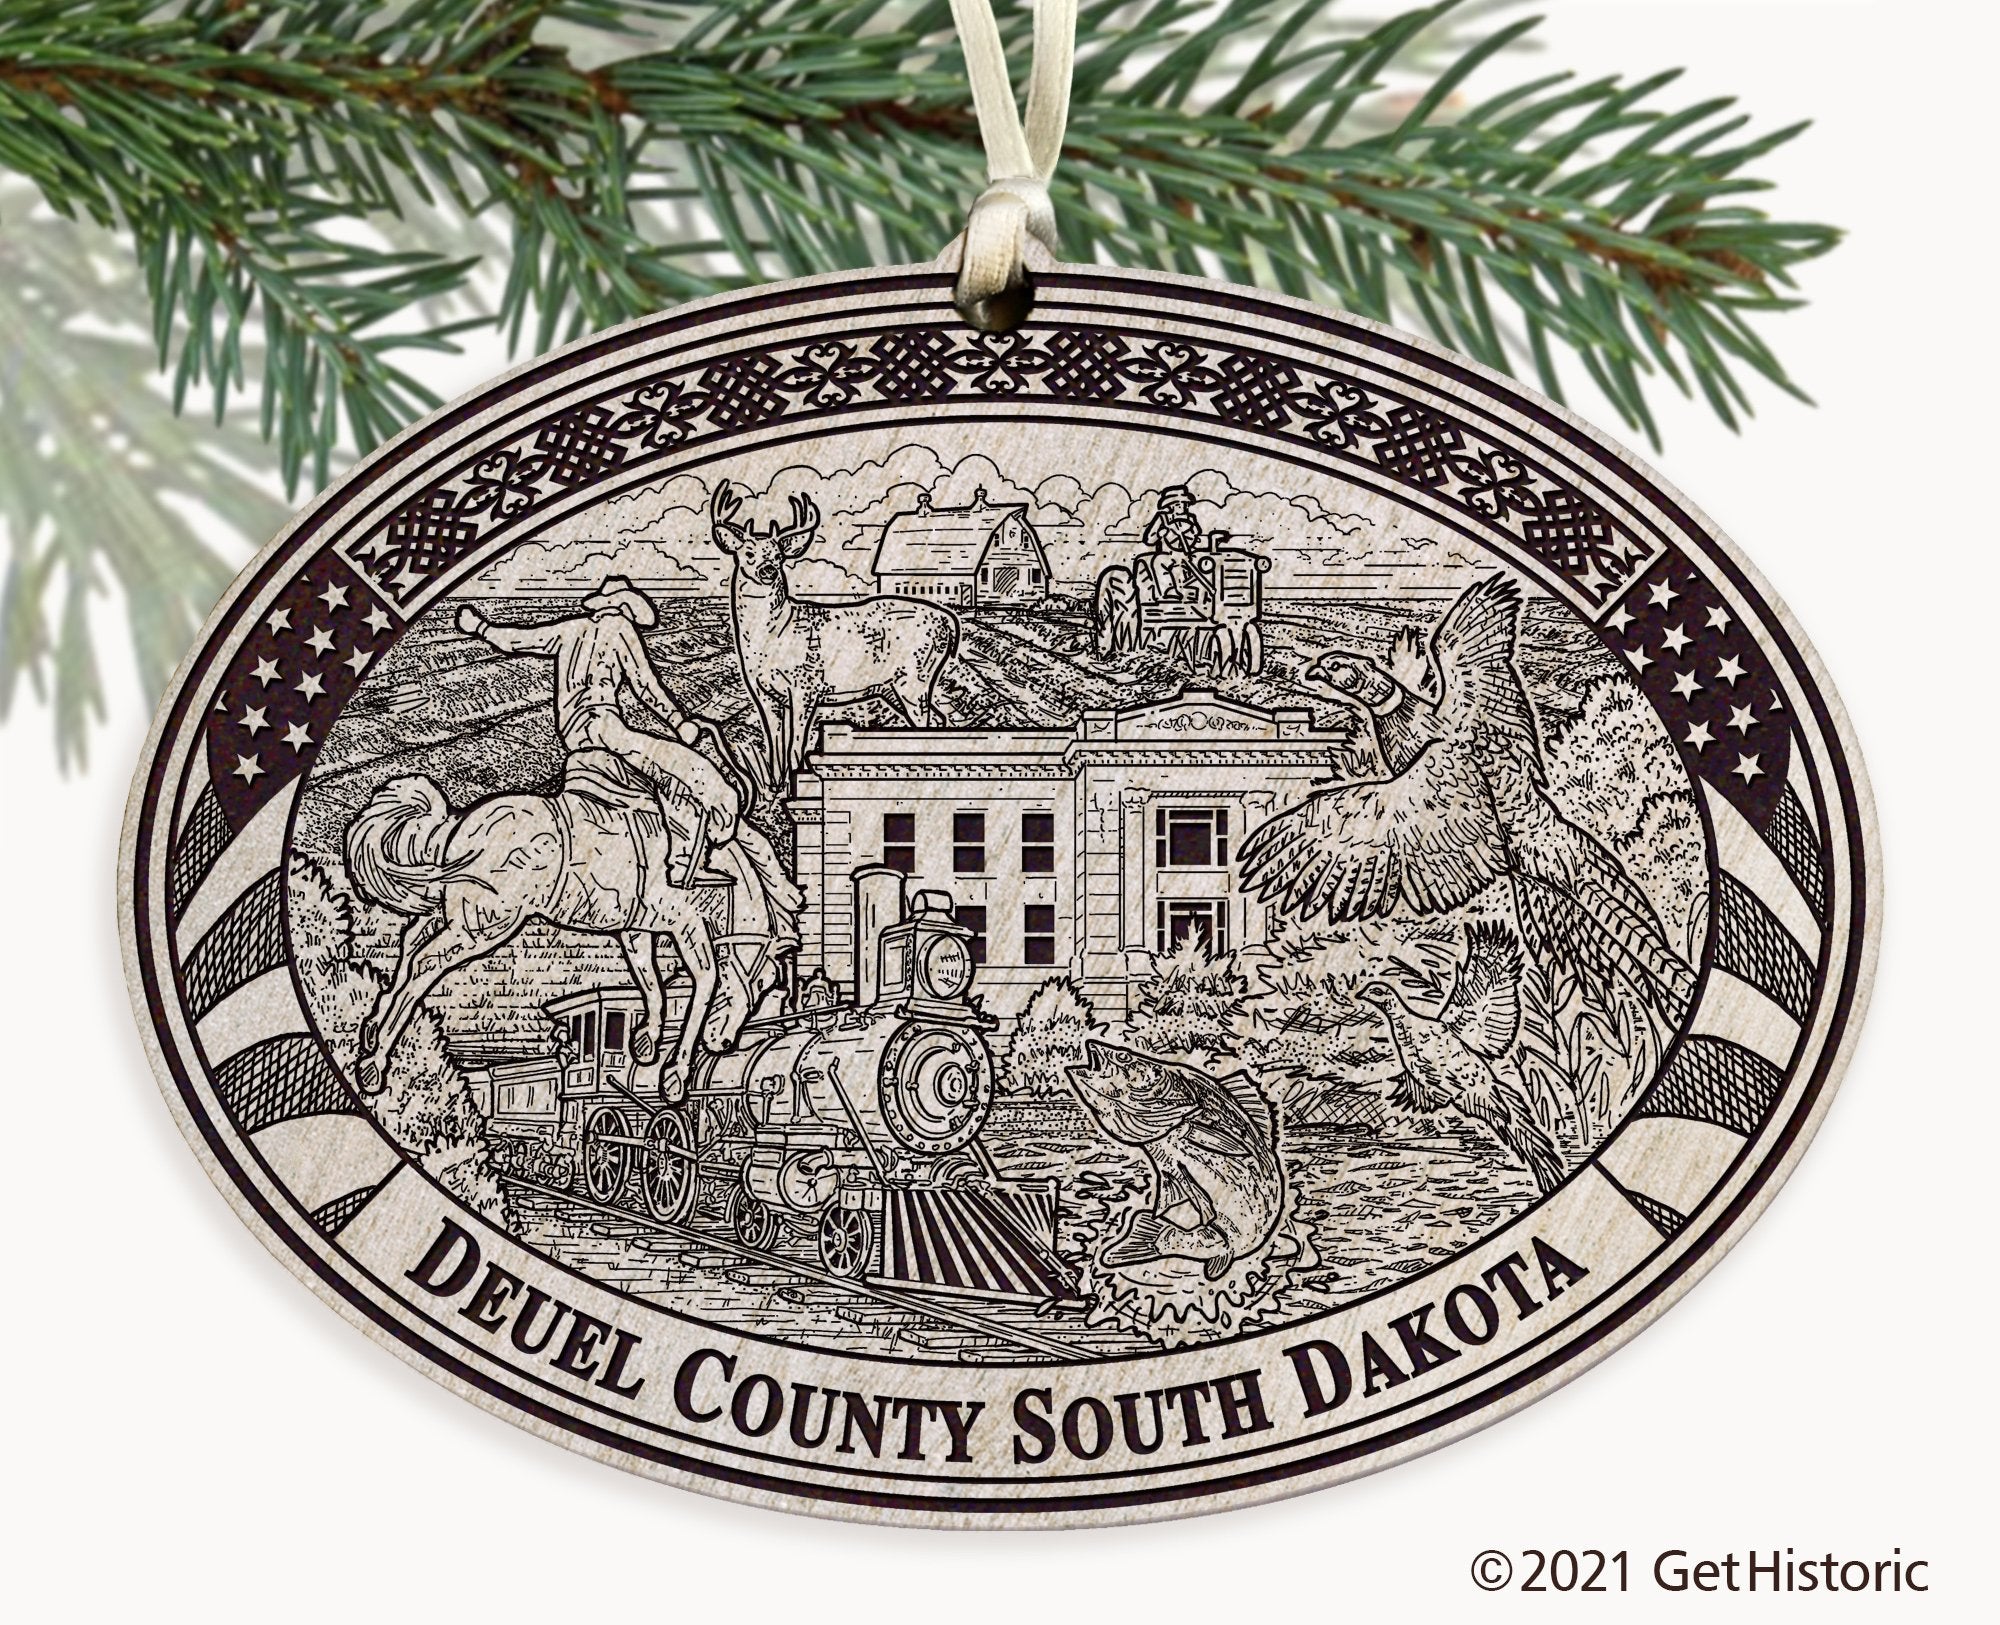 Deuel County South Dakota Engraved Ornament